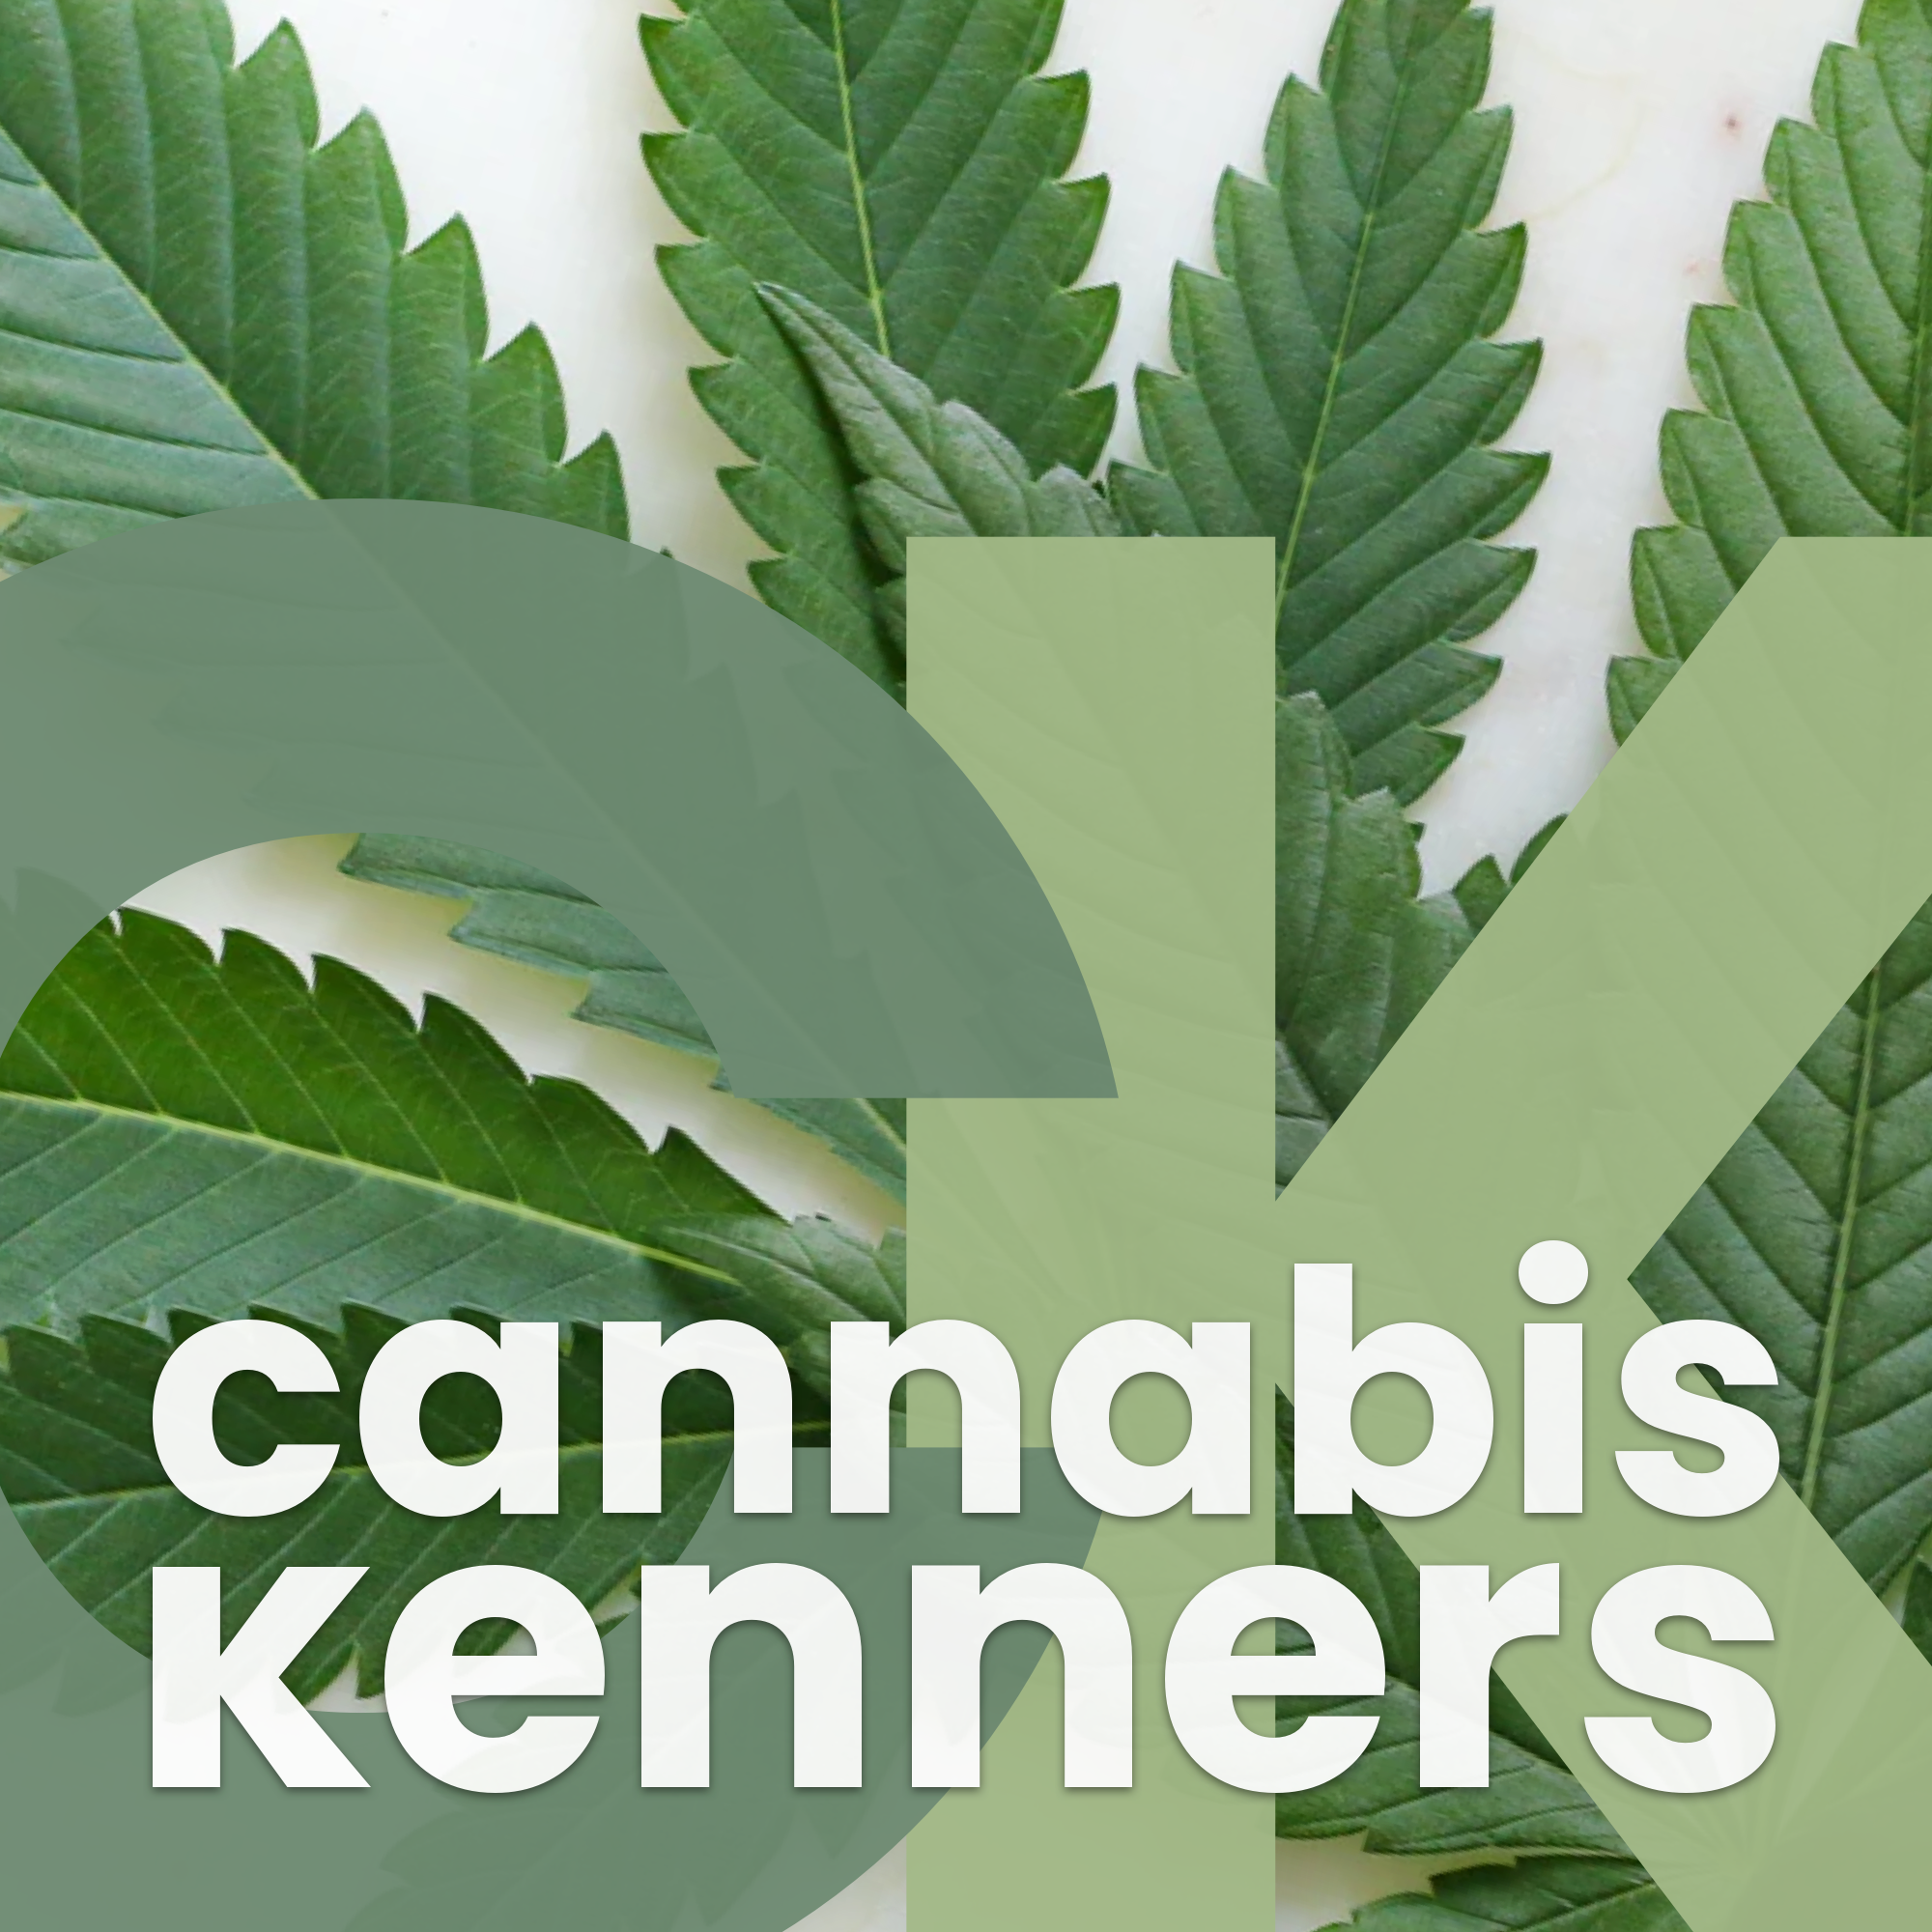 CannabisKenners logo